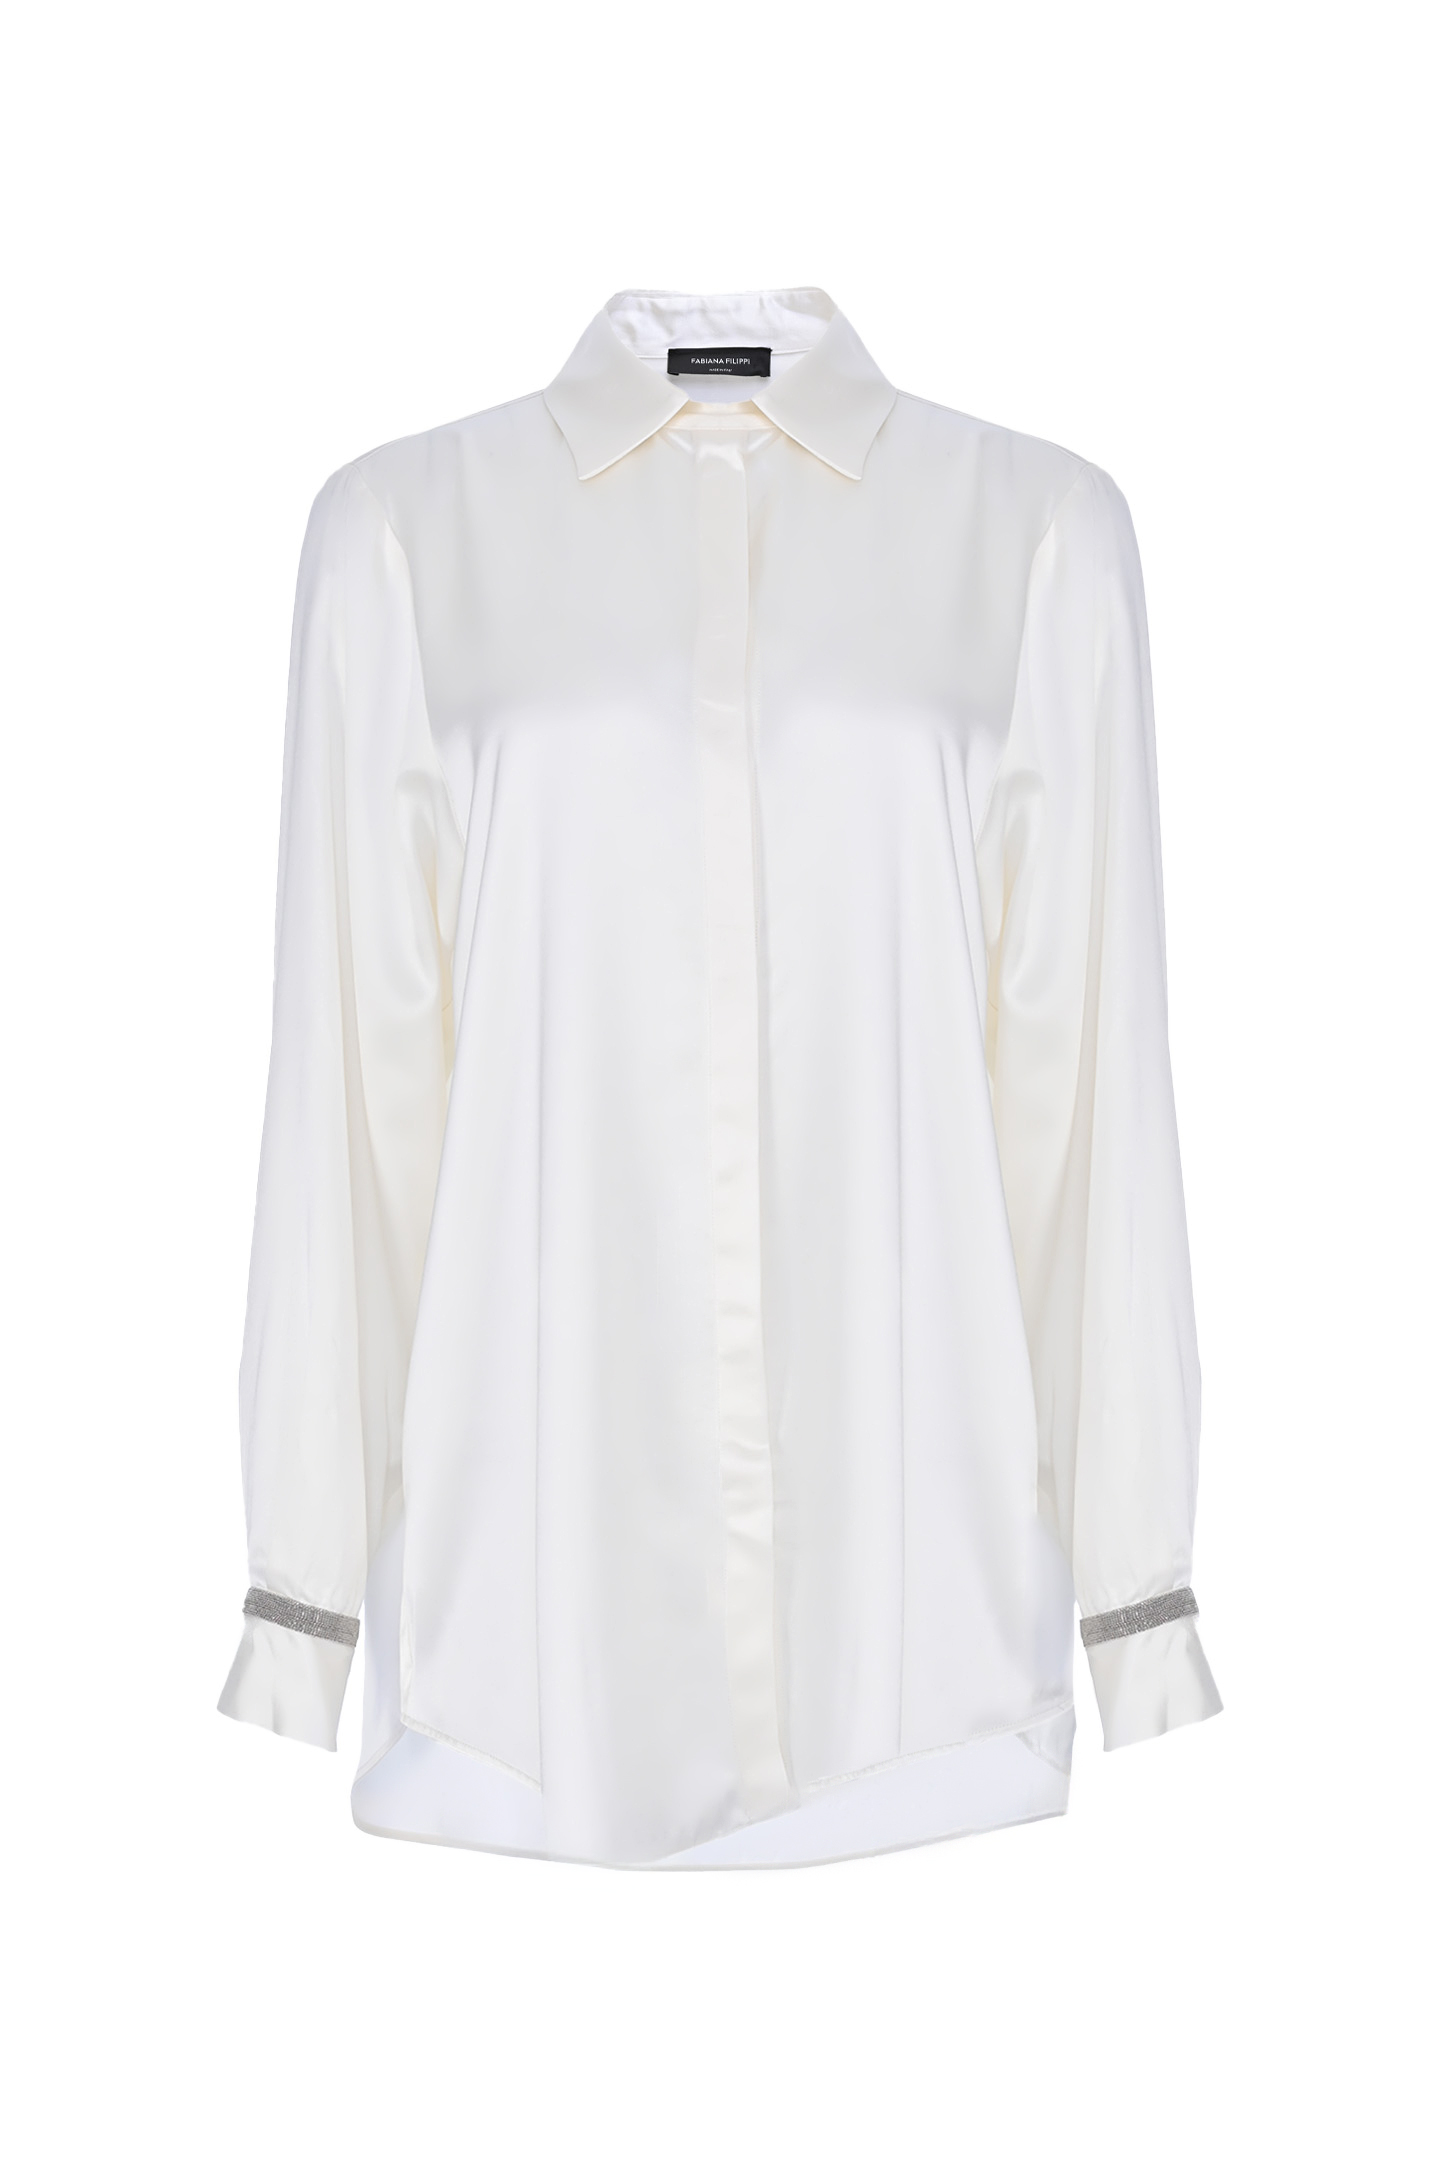 Блуза FABIANA FILIPPI CAD223F614, цвет: Молочный, Женский